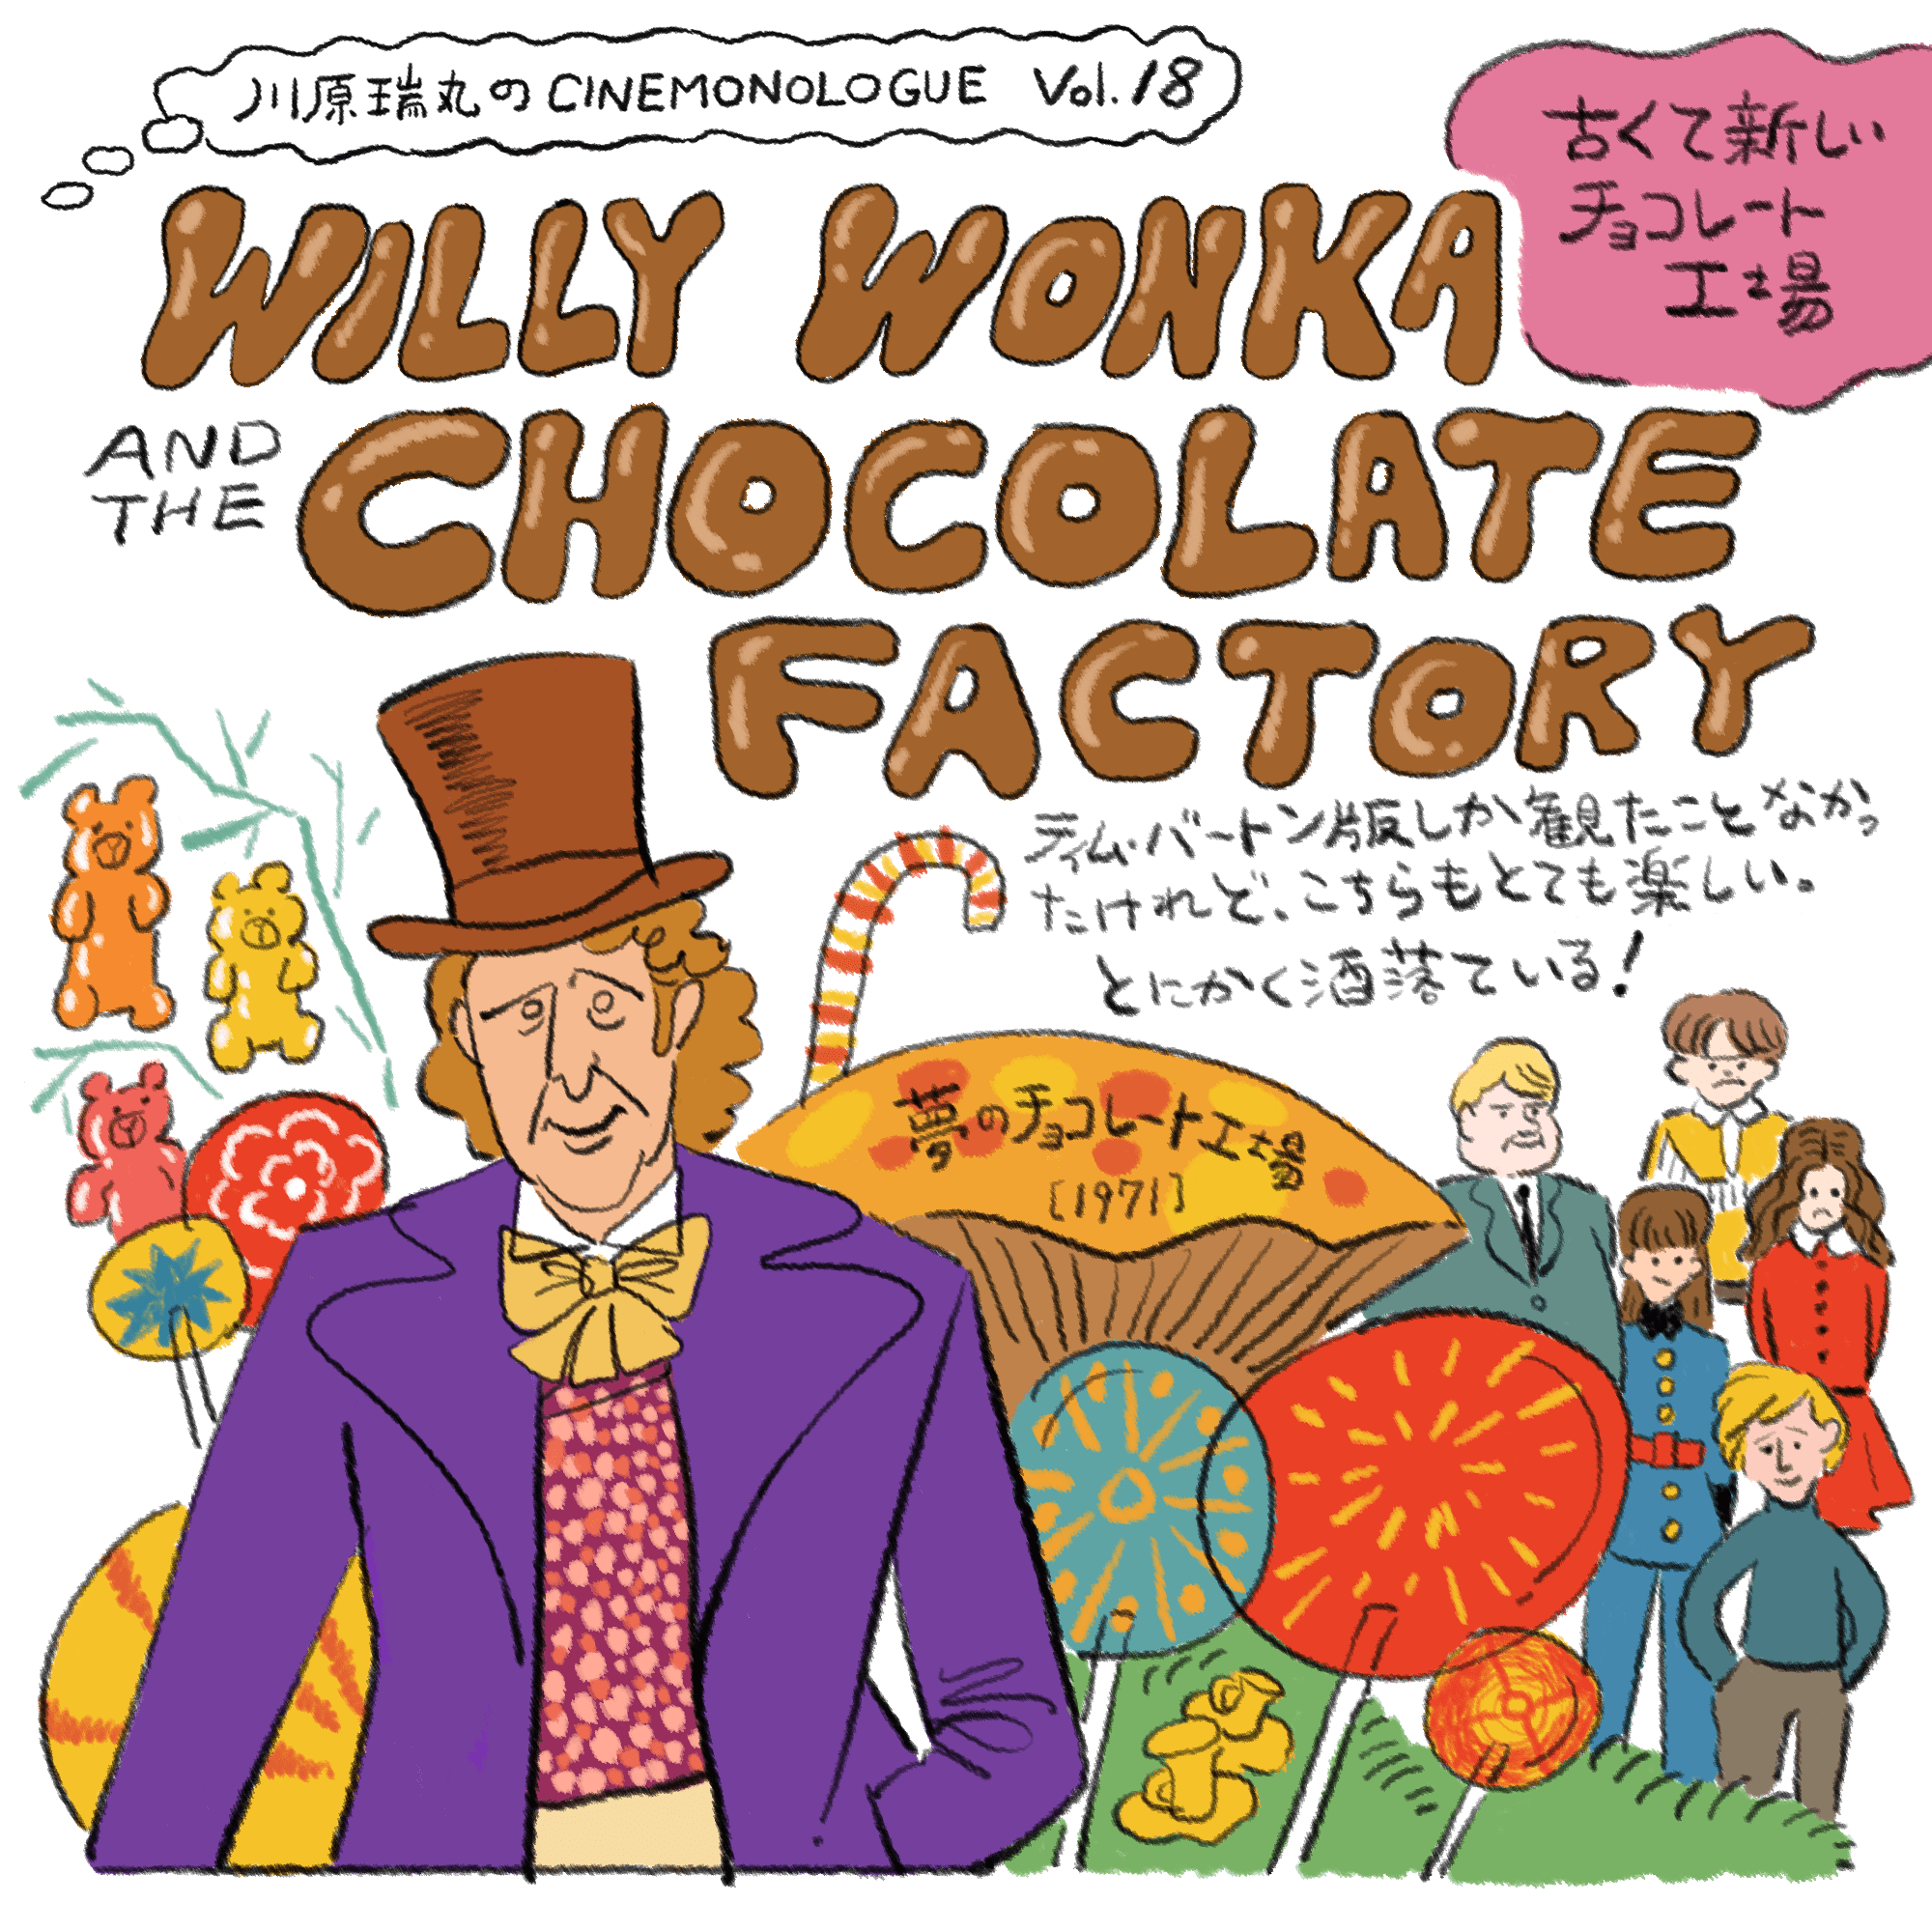 Old and new chocolate factory [Mizumaru Kawahara's CINEMONOLOGUE Vol.18]